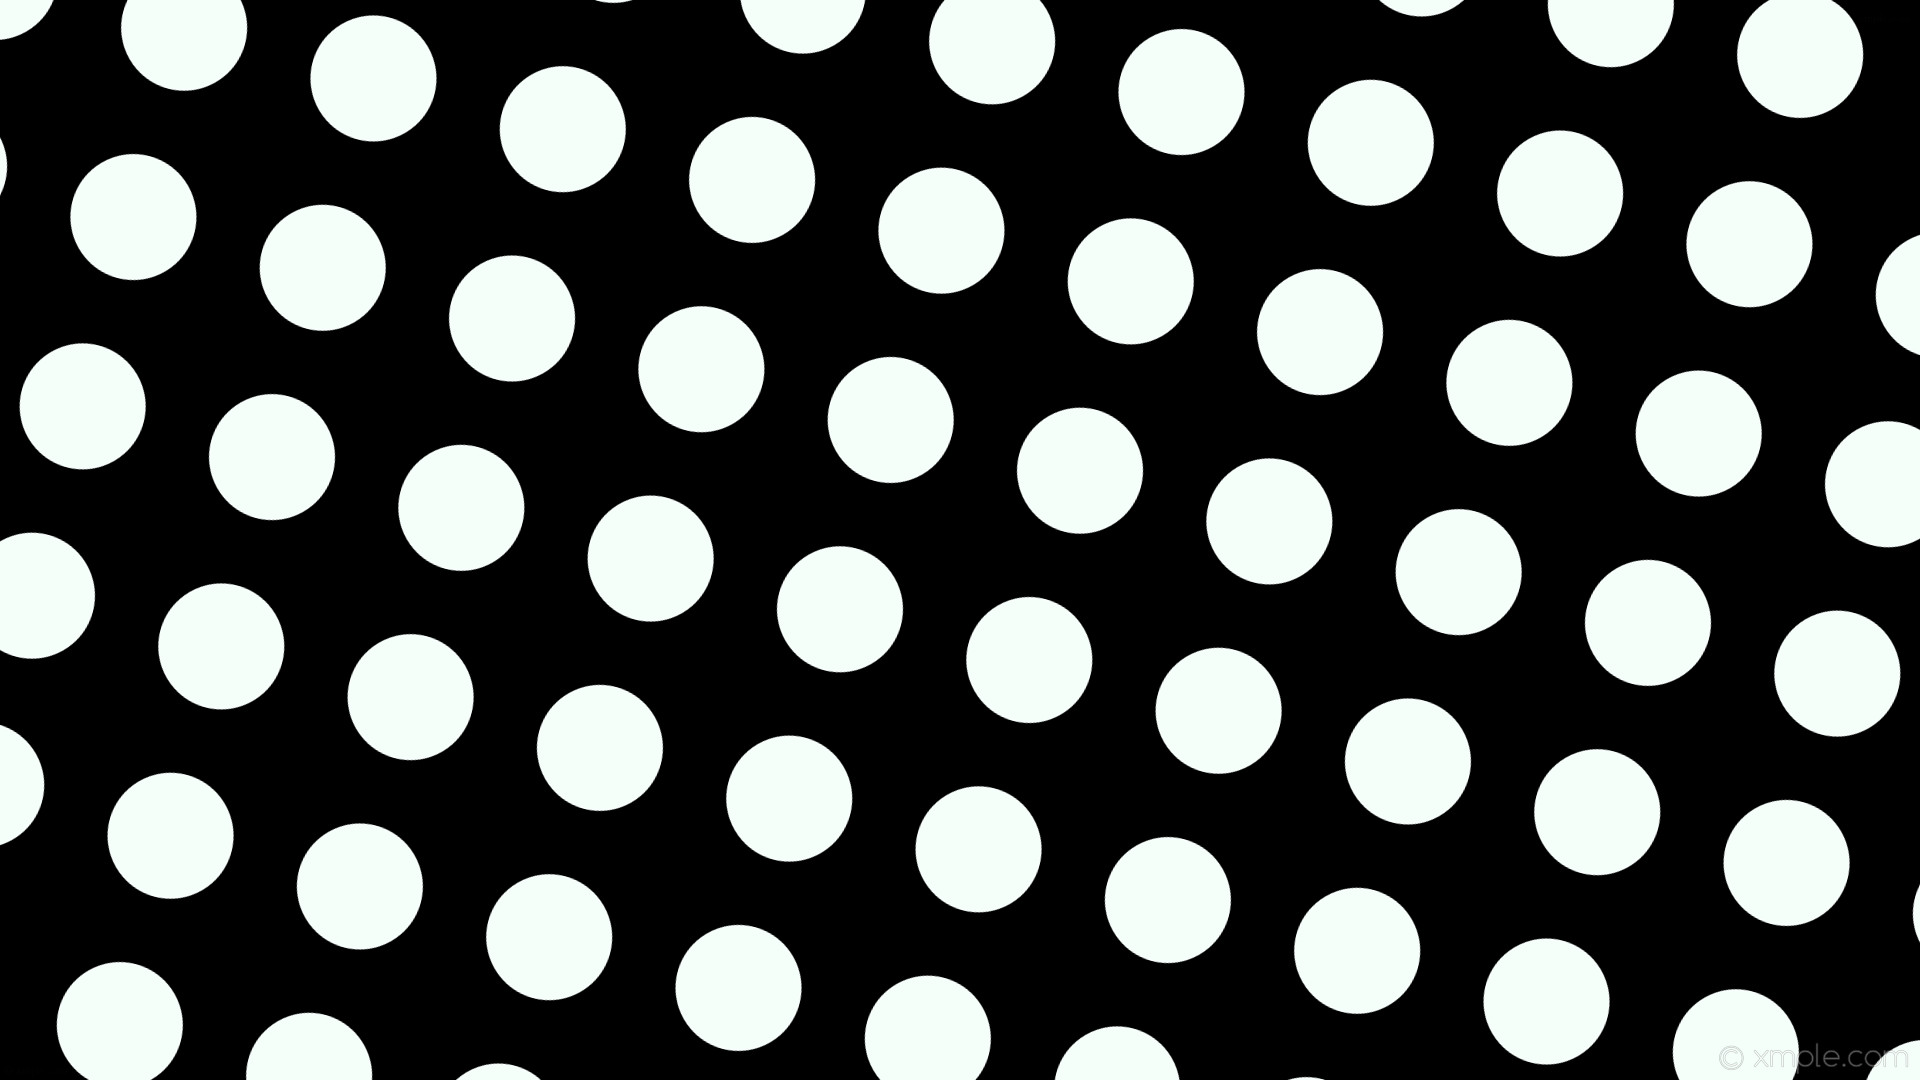 Wallpaper white black spots polka dots mint cream #f5fffa 345 126px 196px